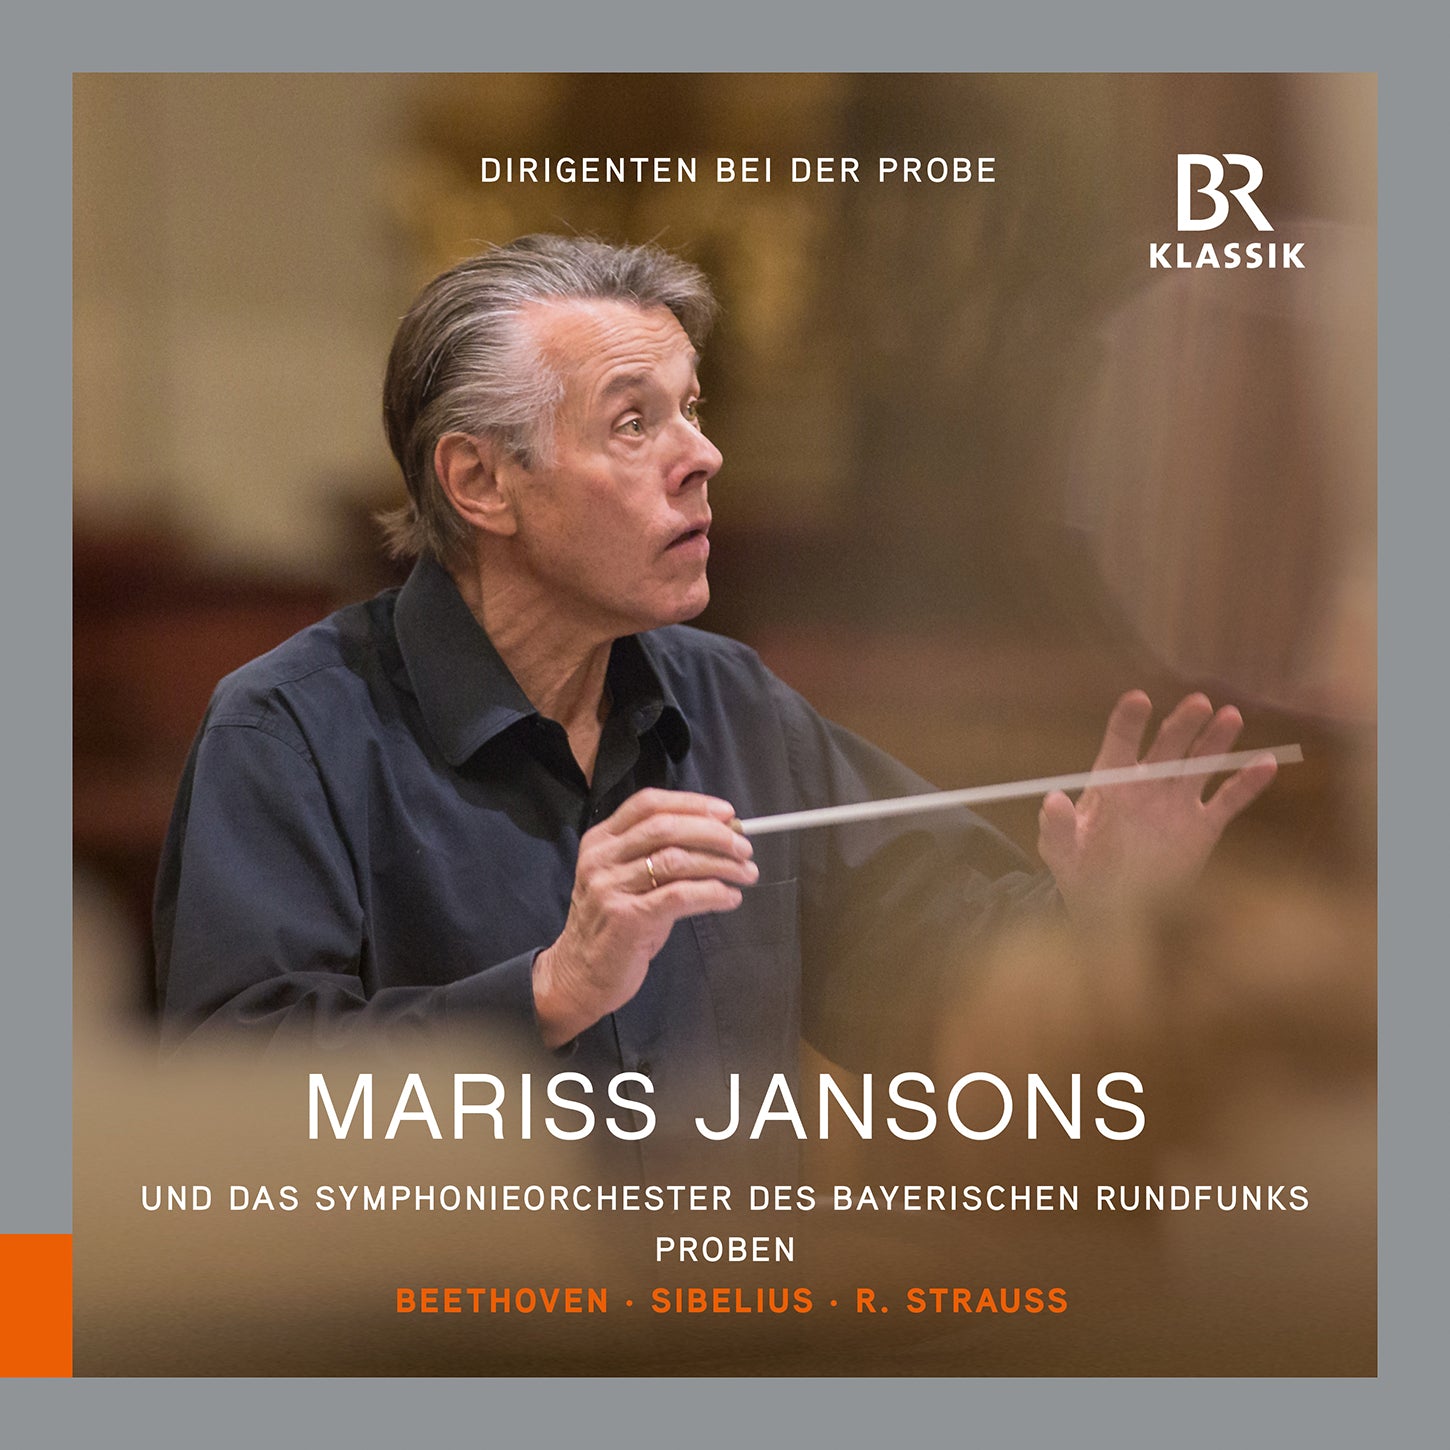 Beethoven, Sibelius, R. Strauss: Conductors in Rehearsal - Mariss Jansons vol. 2 / Bavarian Radio Symphony Orchestra